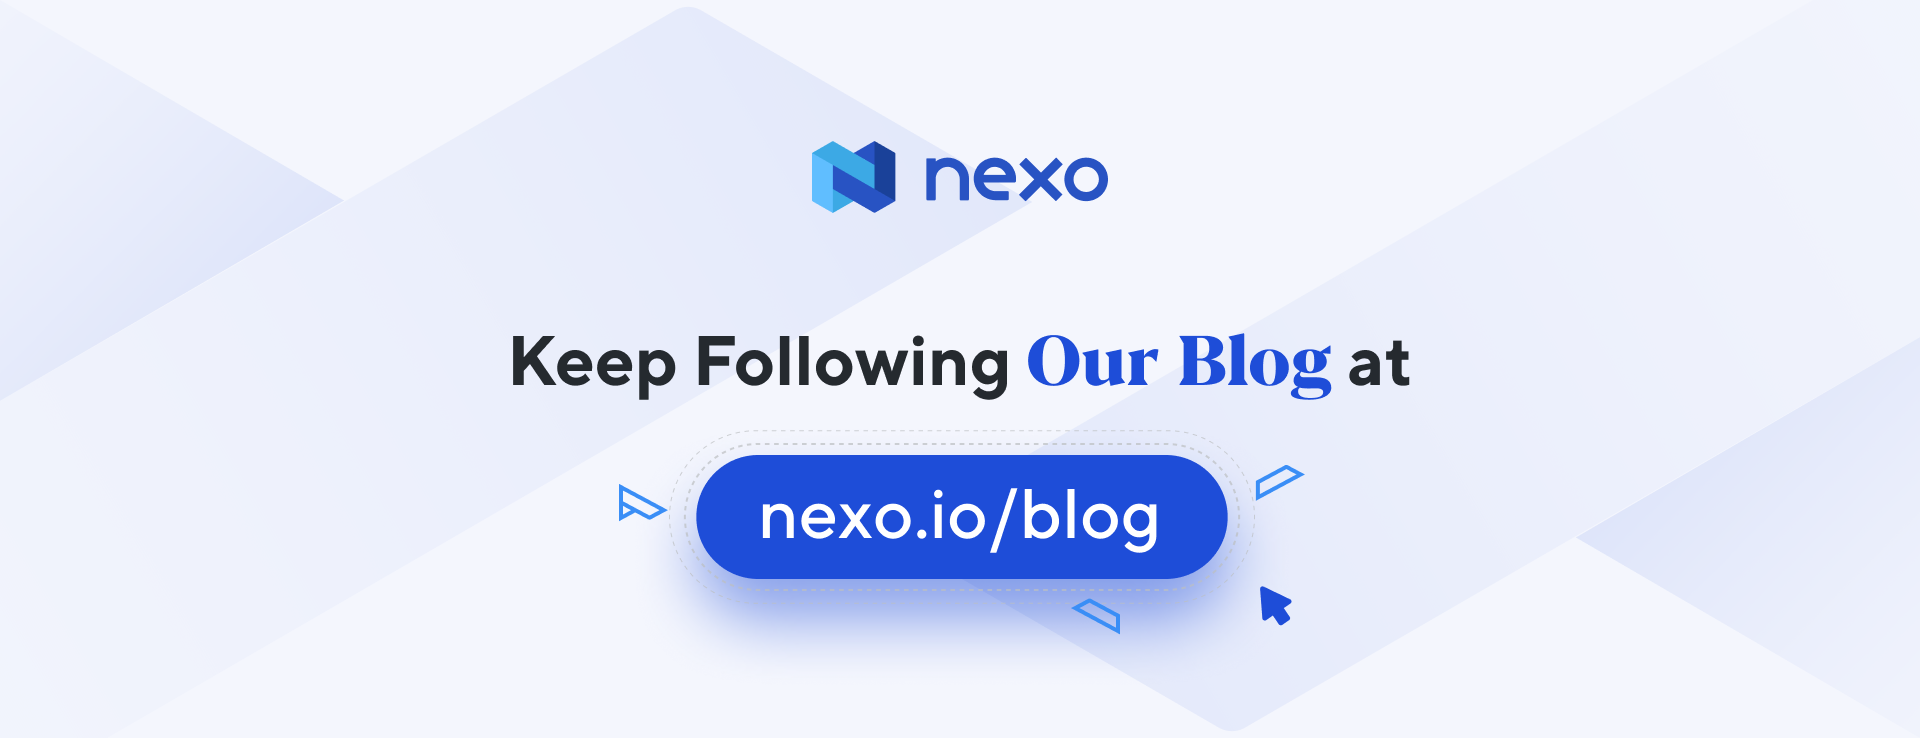 Nexo’s Blog Has a New Home